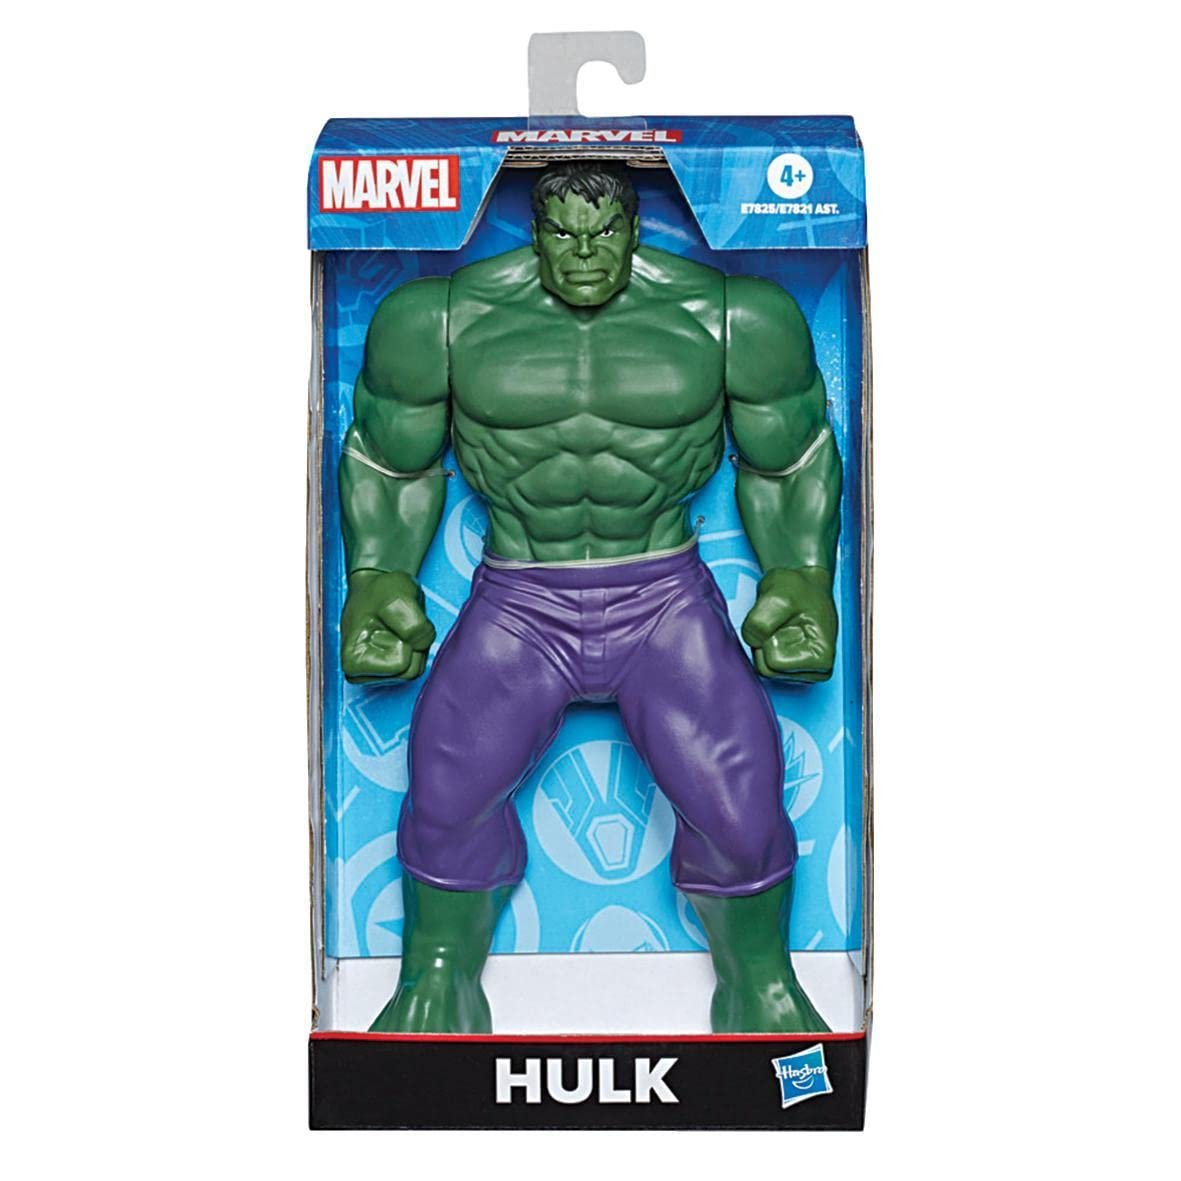 Marvel Classic Hulk Action Figure image 2